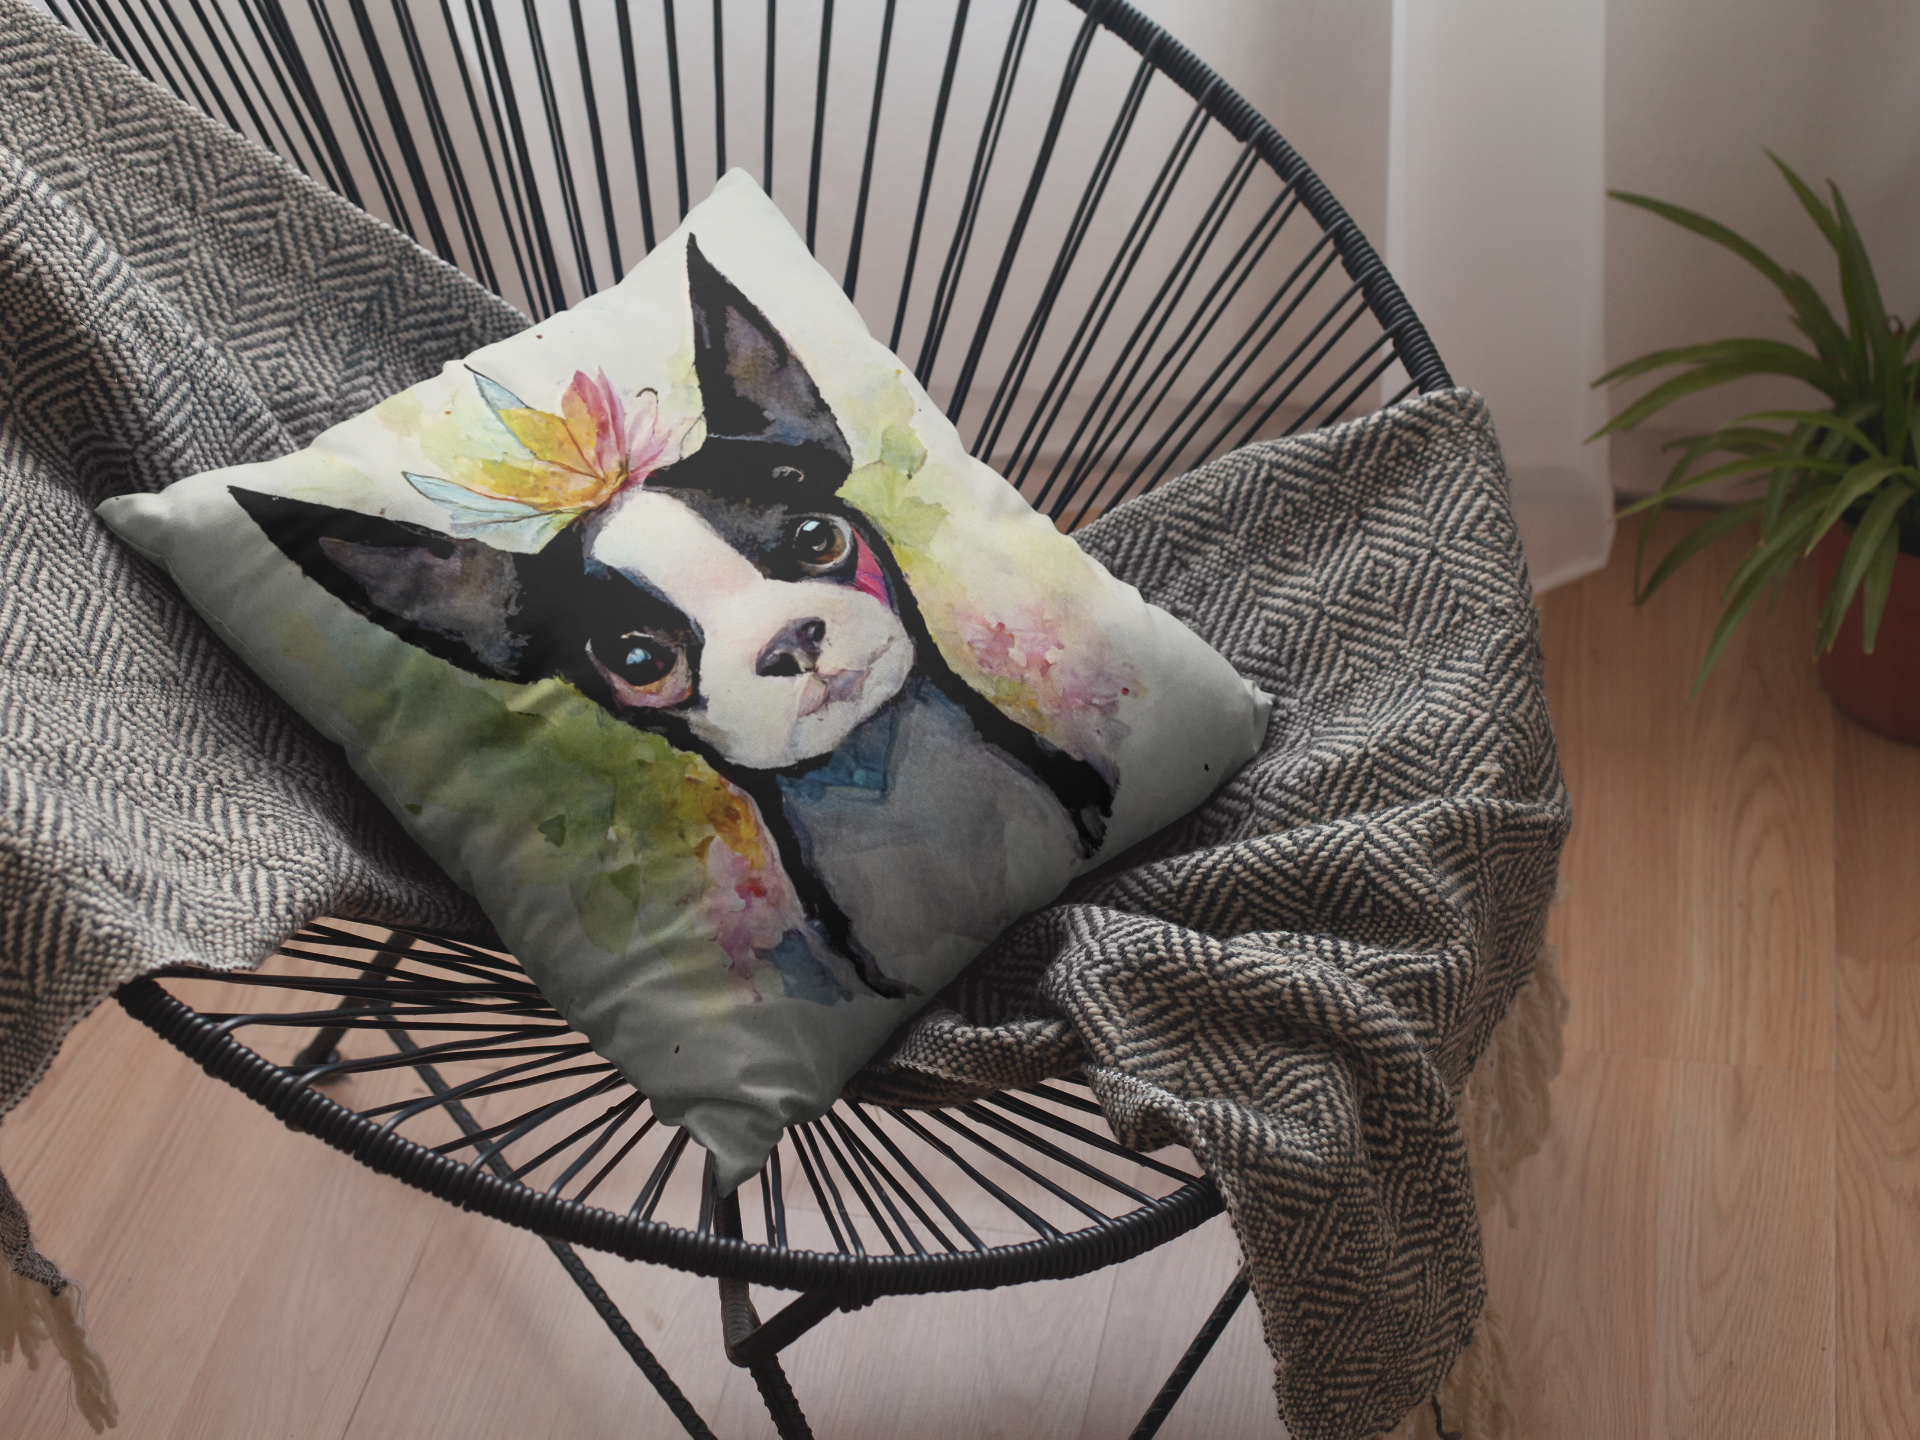 Decorative pillow case with two distinct Boston Terrier designs.